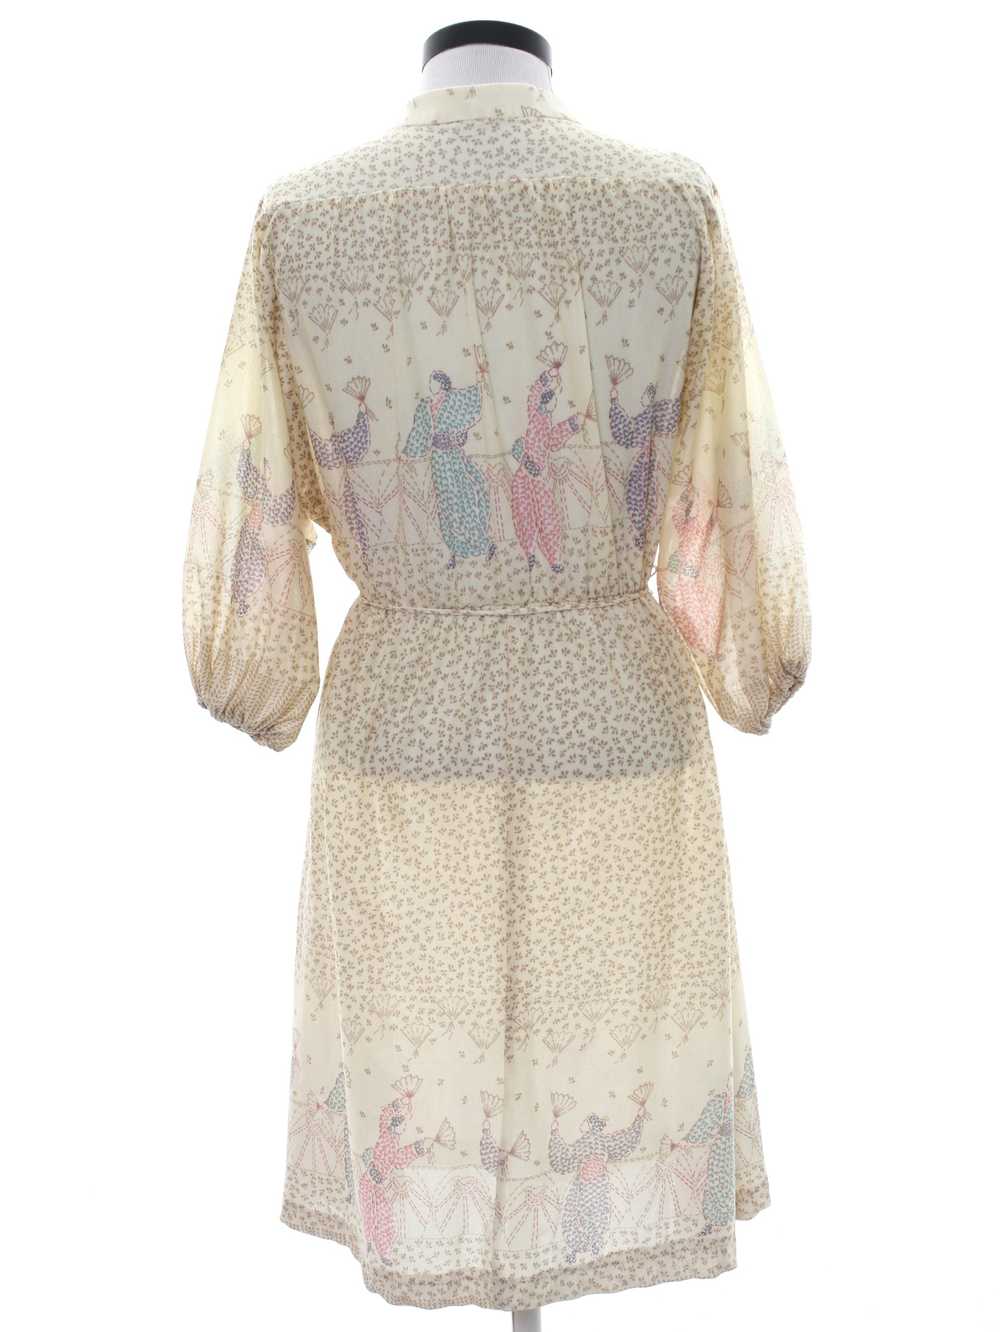 1970's Secretary Dress - image 3